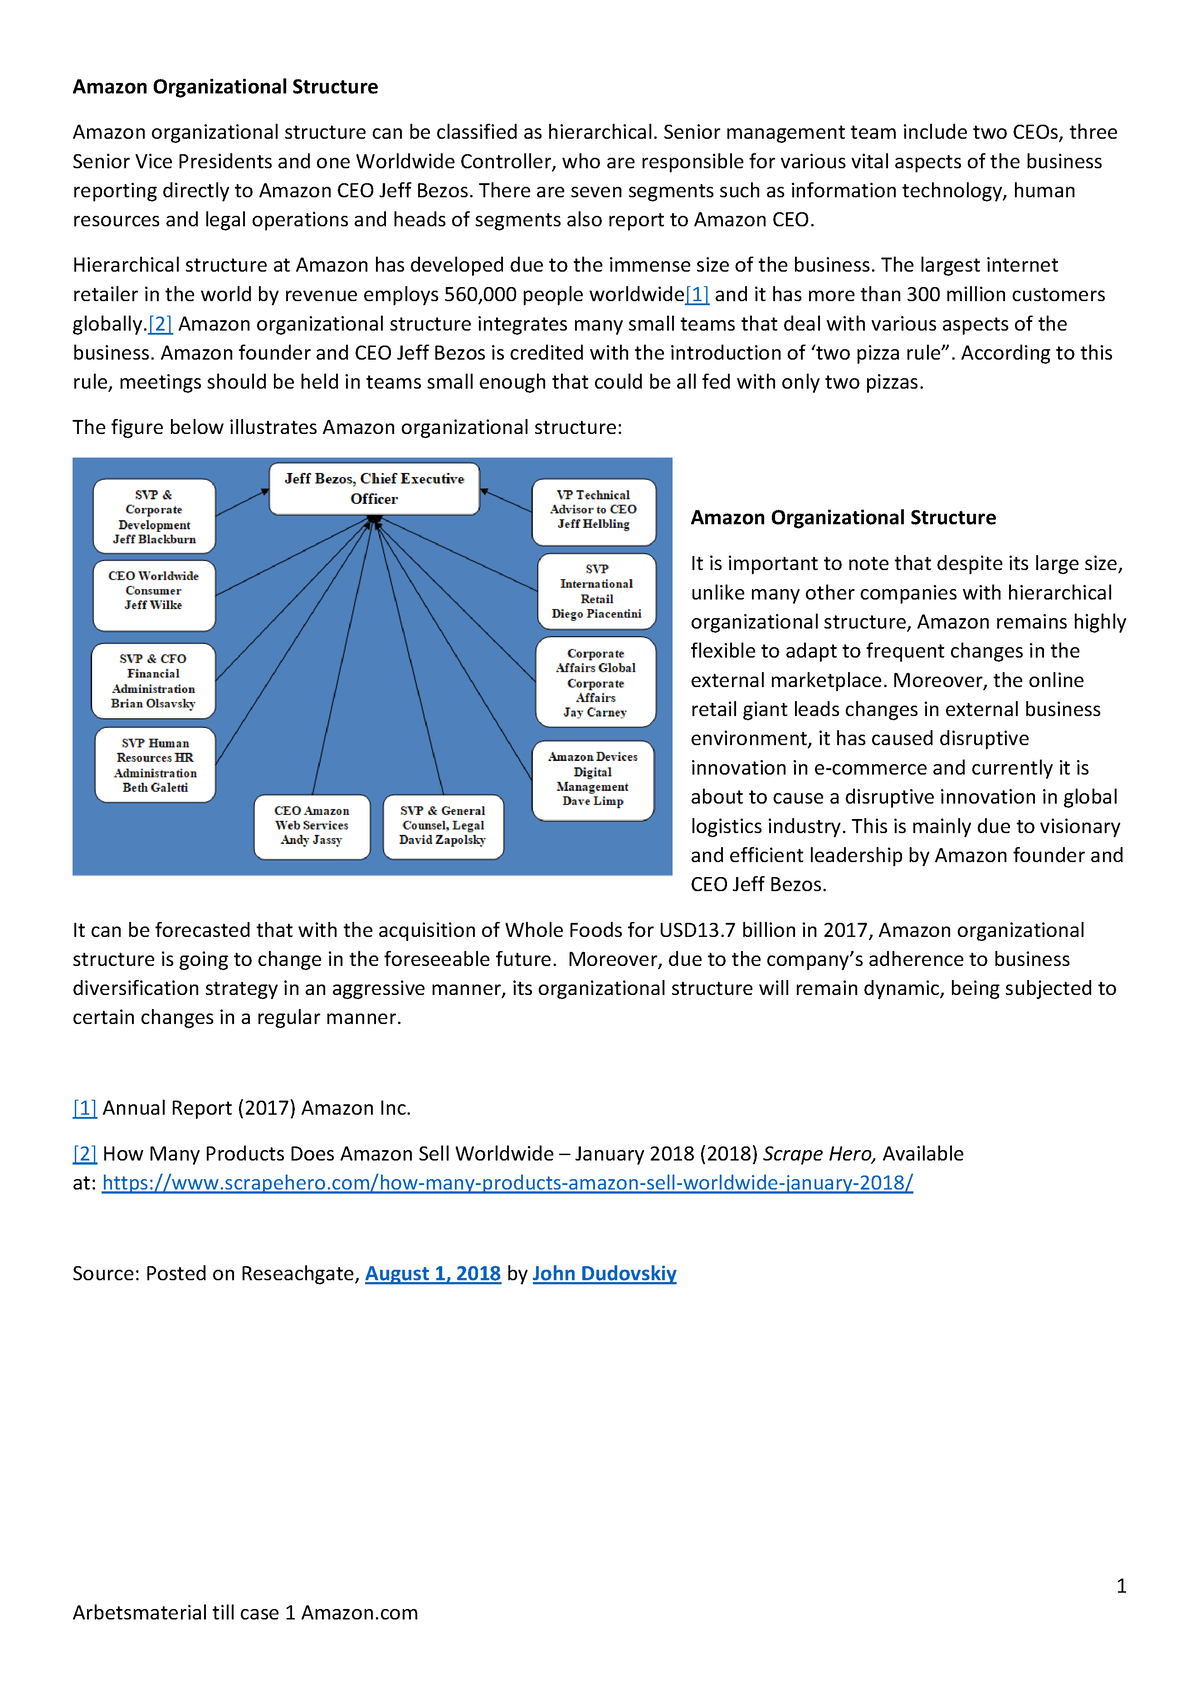 Amazon Organizational Structure 1 - 1 Arbetsmaterial till case 1 Amazon Amazon Organizational - Studocu